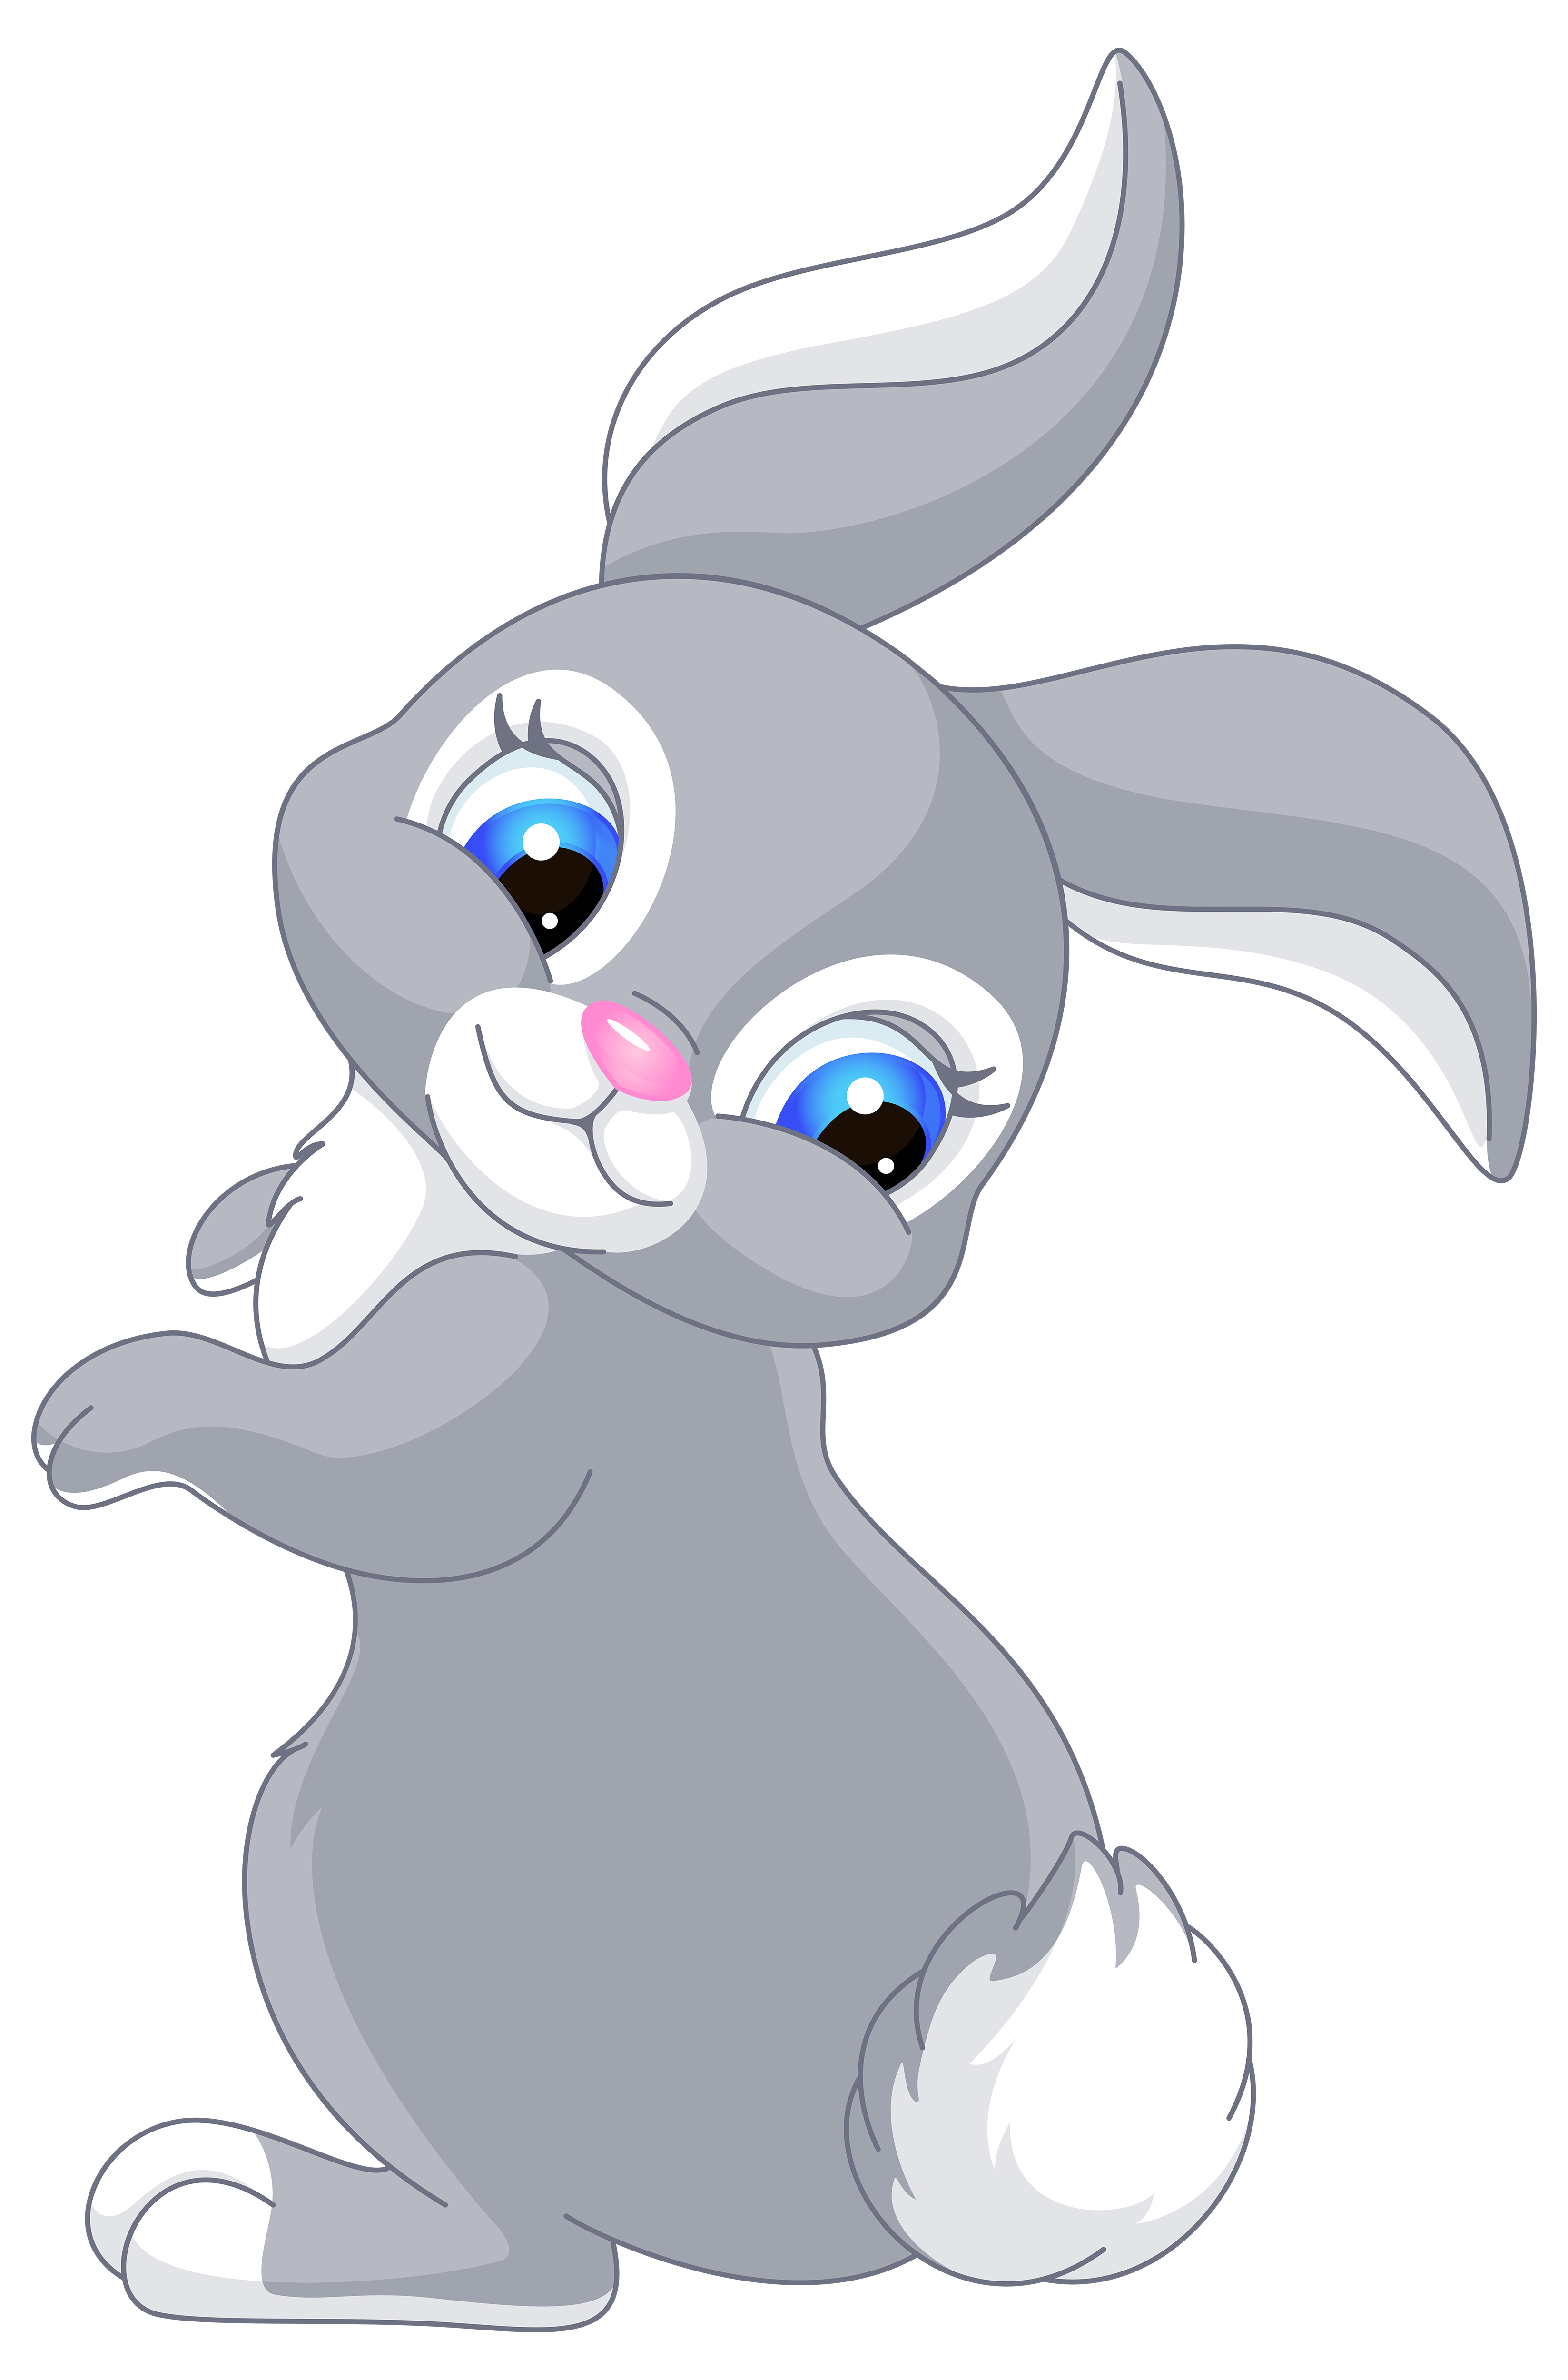 Png Rabbit Cartoon - Cute Bunny Cartoon Png Clip Art Image, Transparent background PNG HD thumbnail